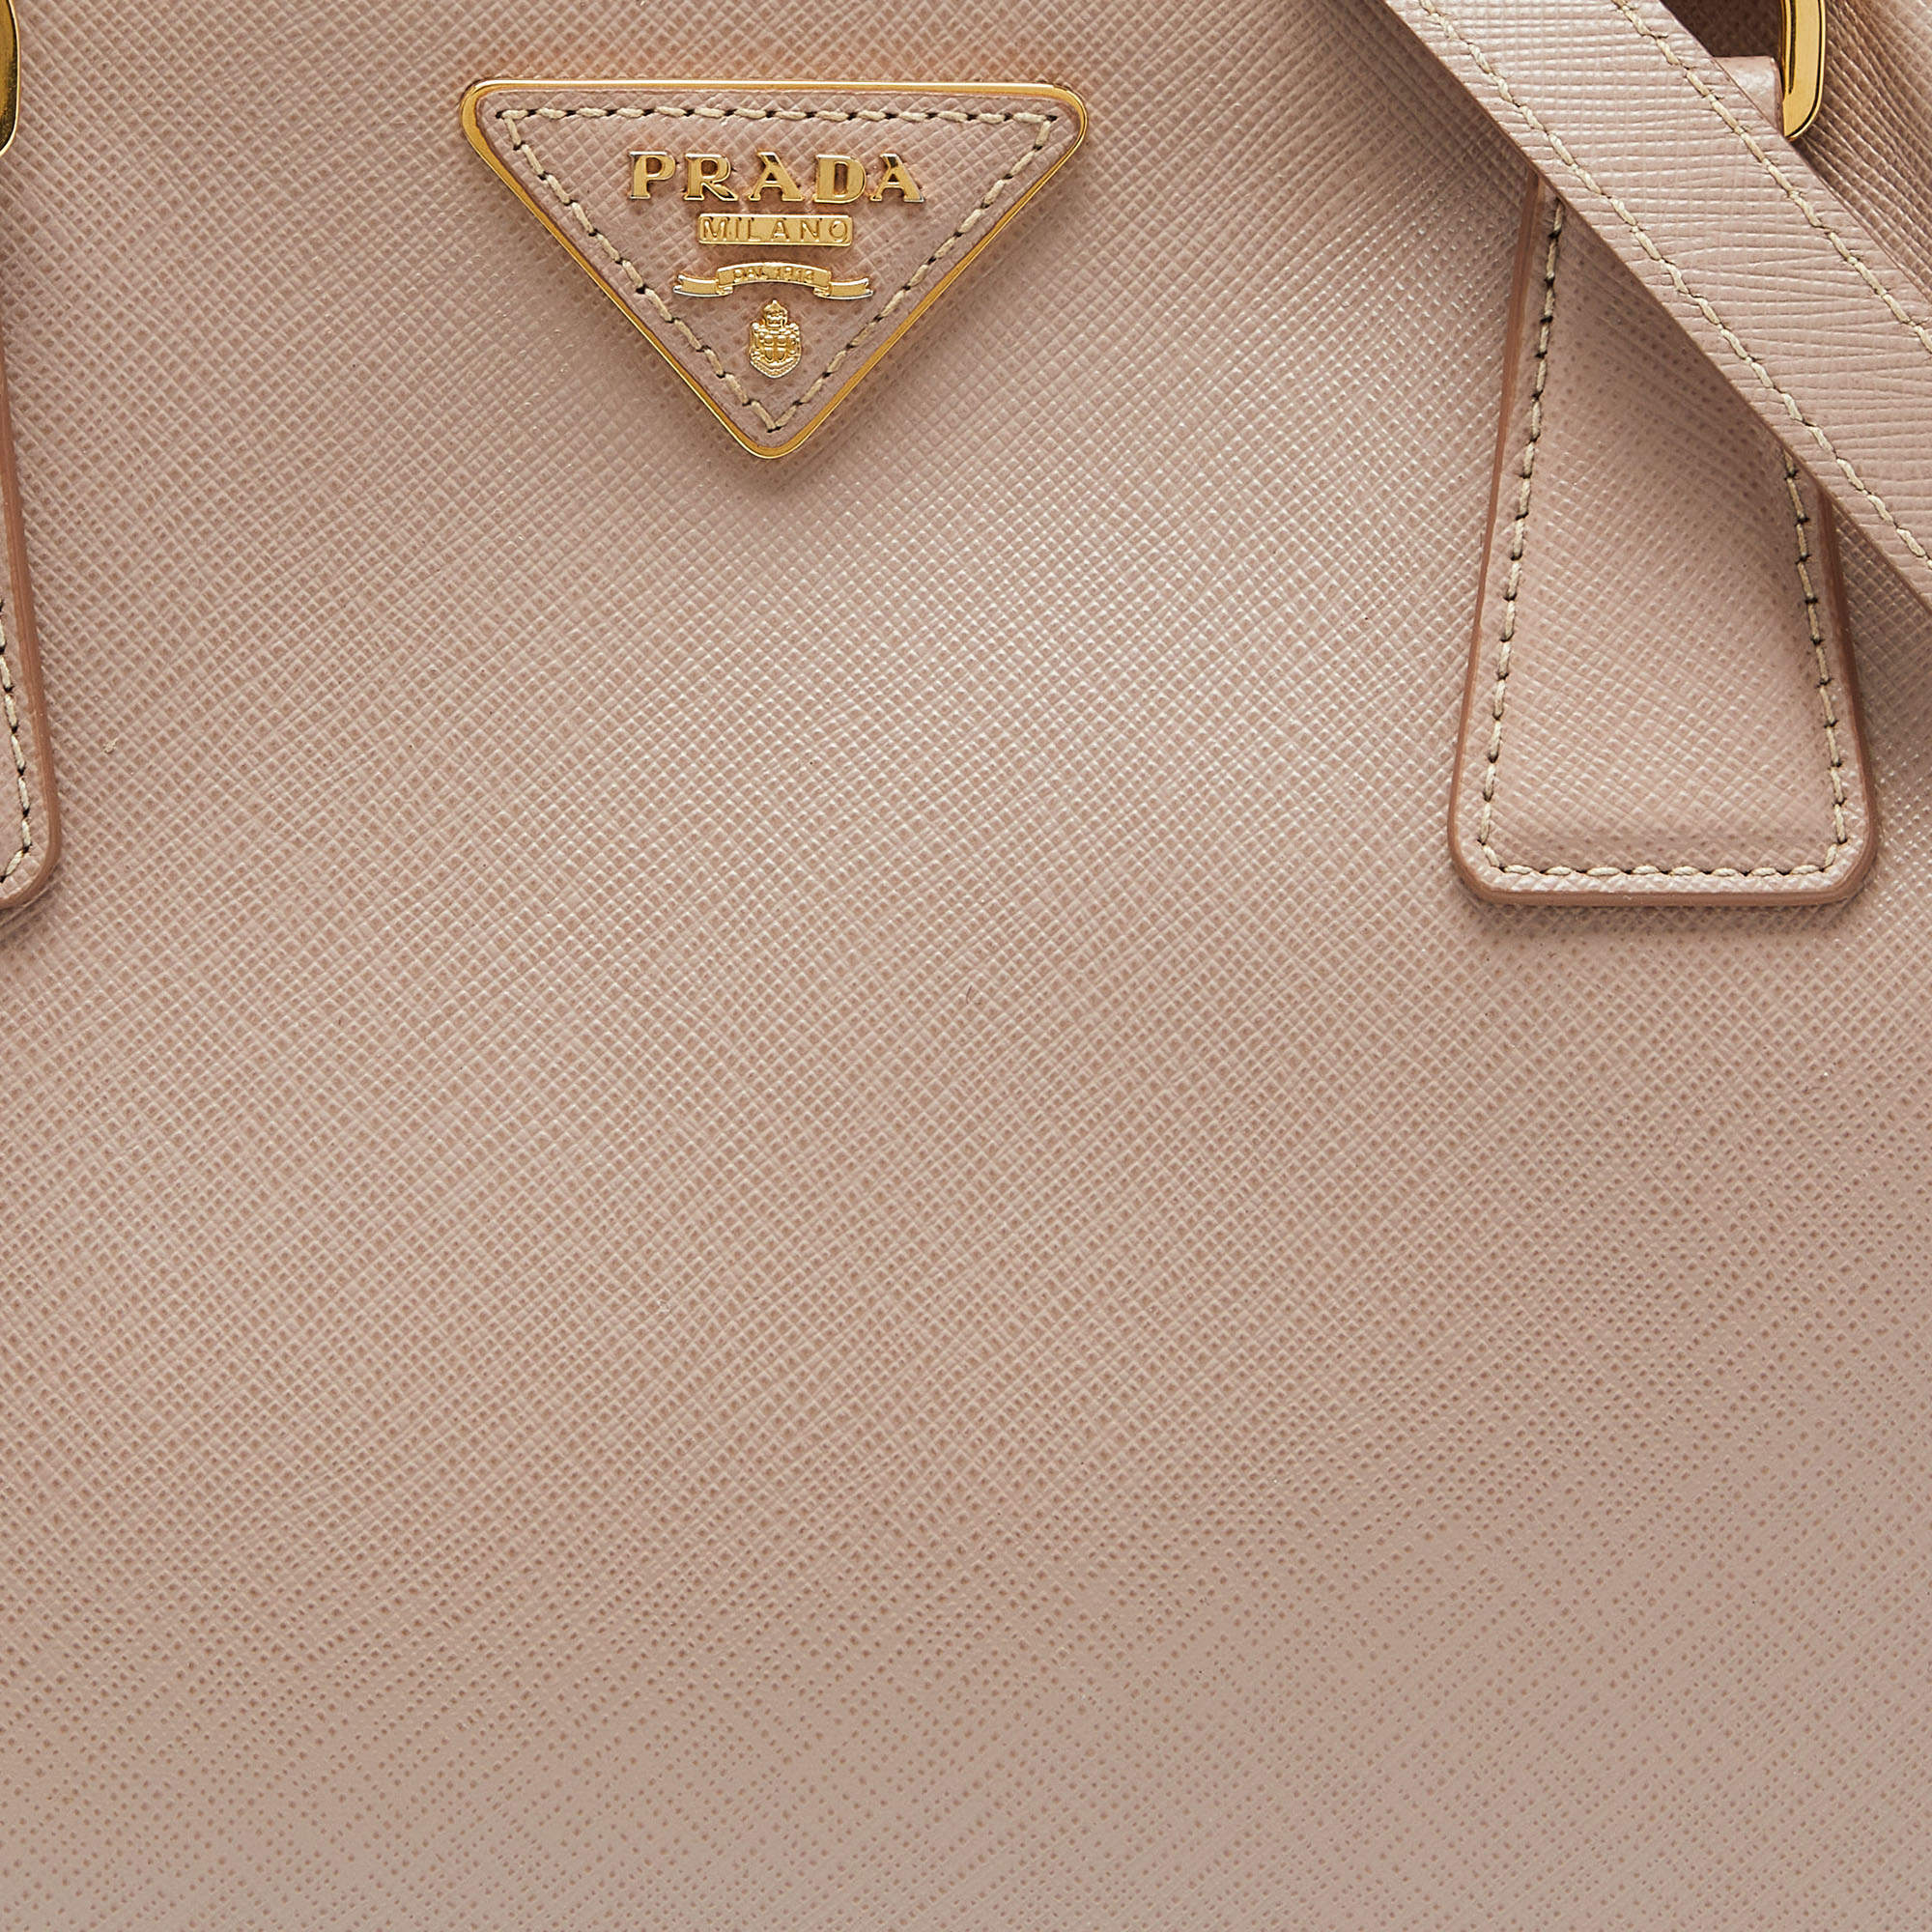 Powder Pink Small Prada Galleria Saffiano Leather Bag